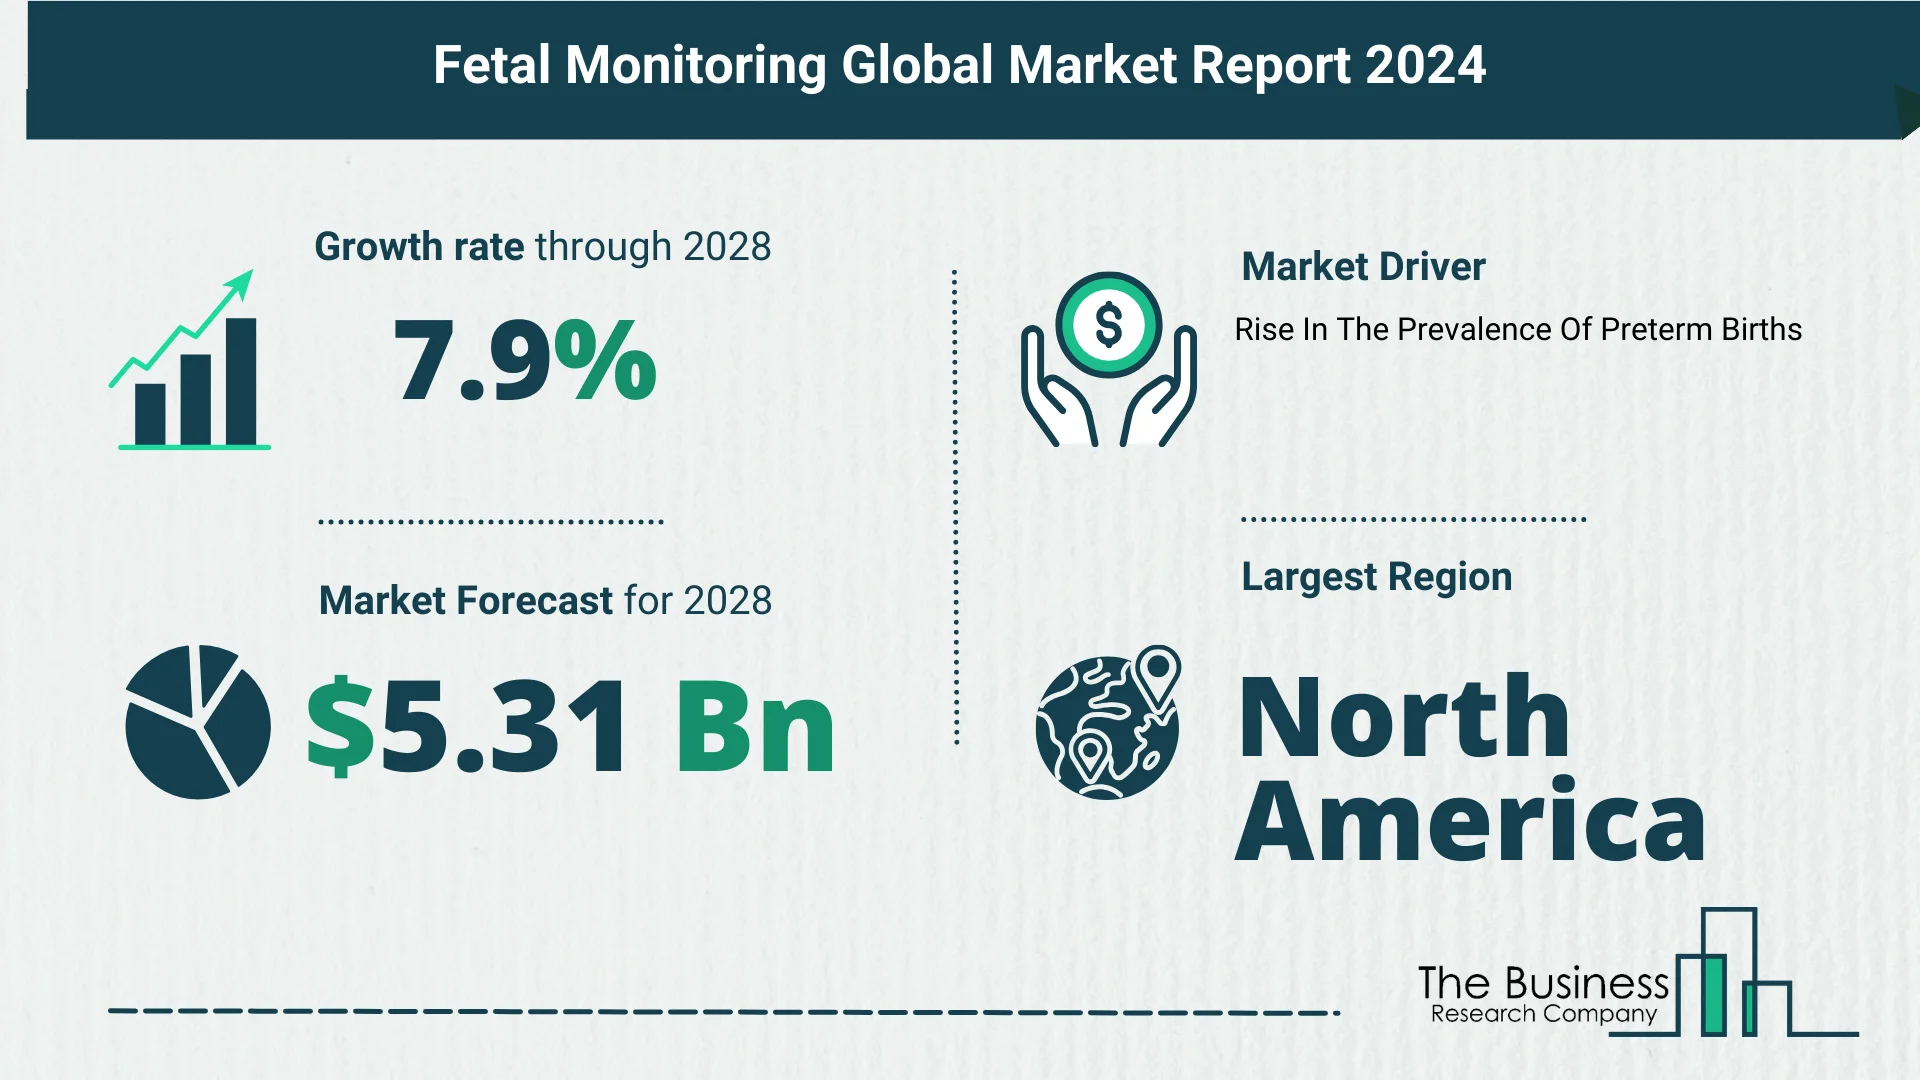 Global Fetal Monitoring Market Report